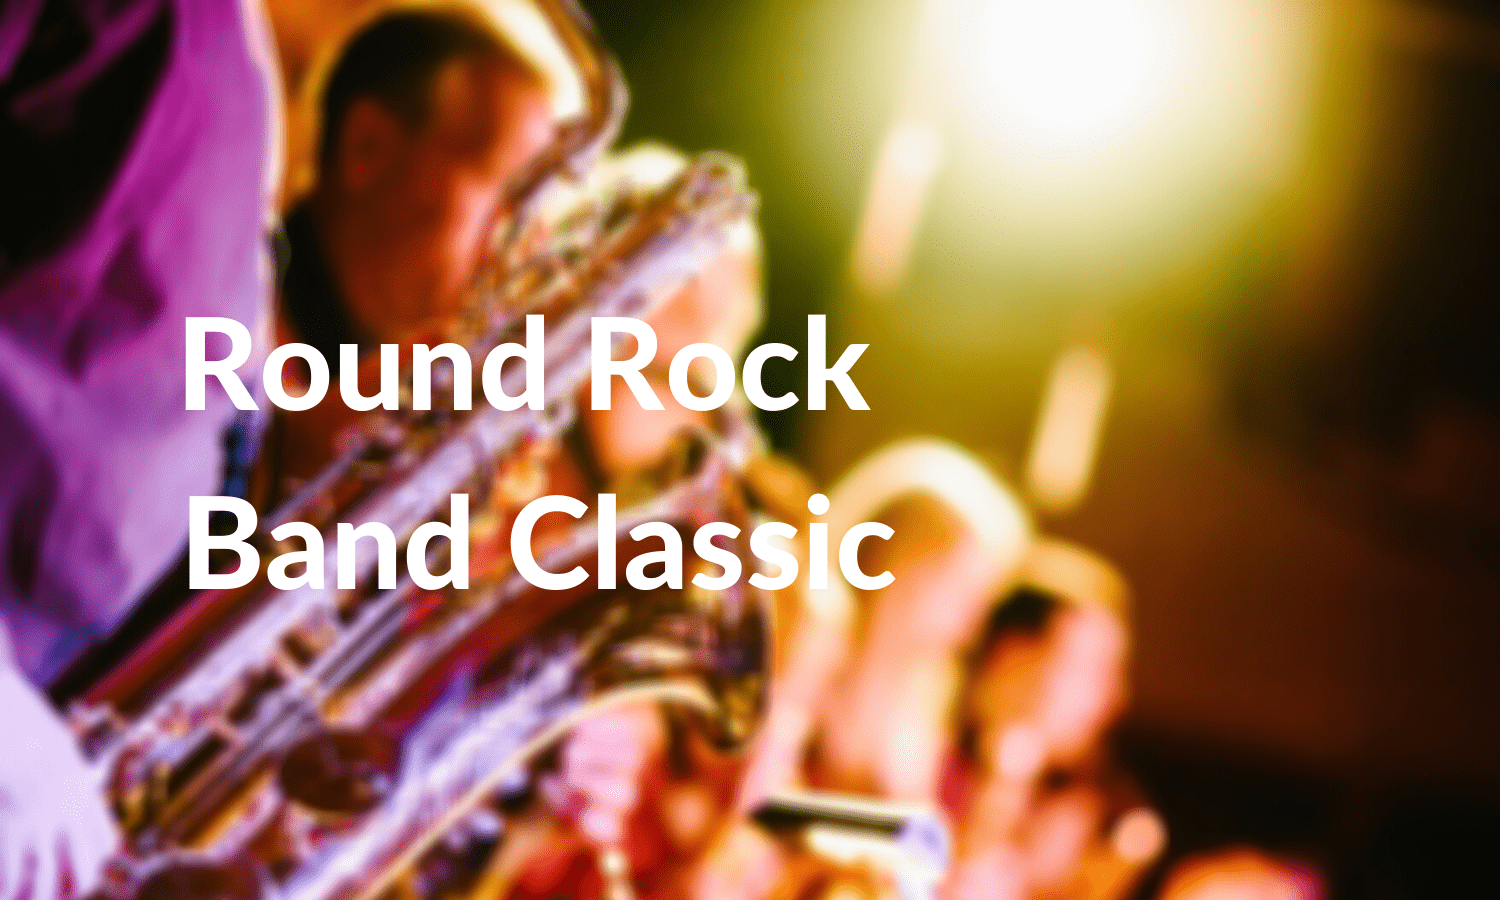 Round Rock Band Classic Success